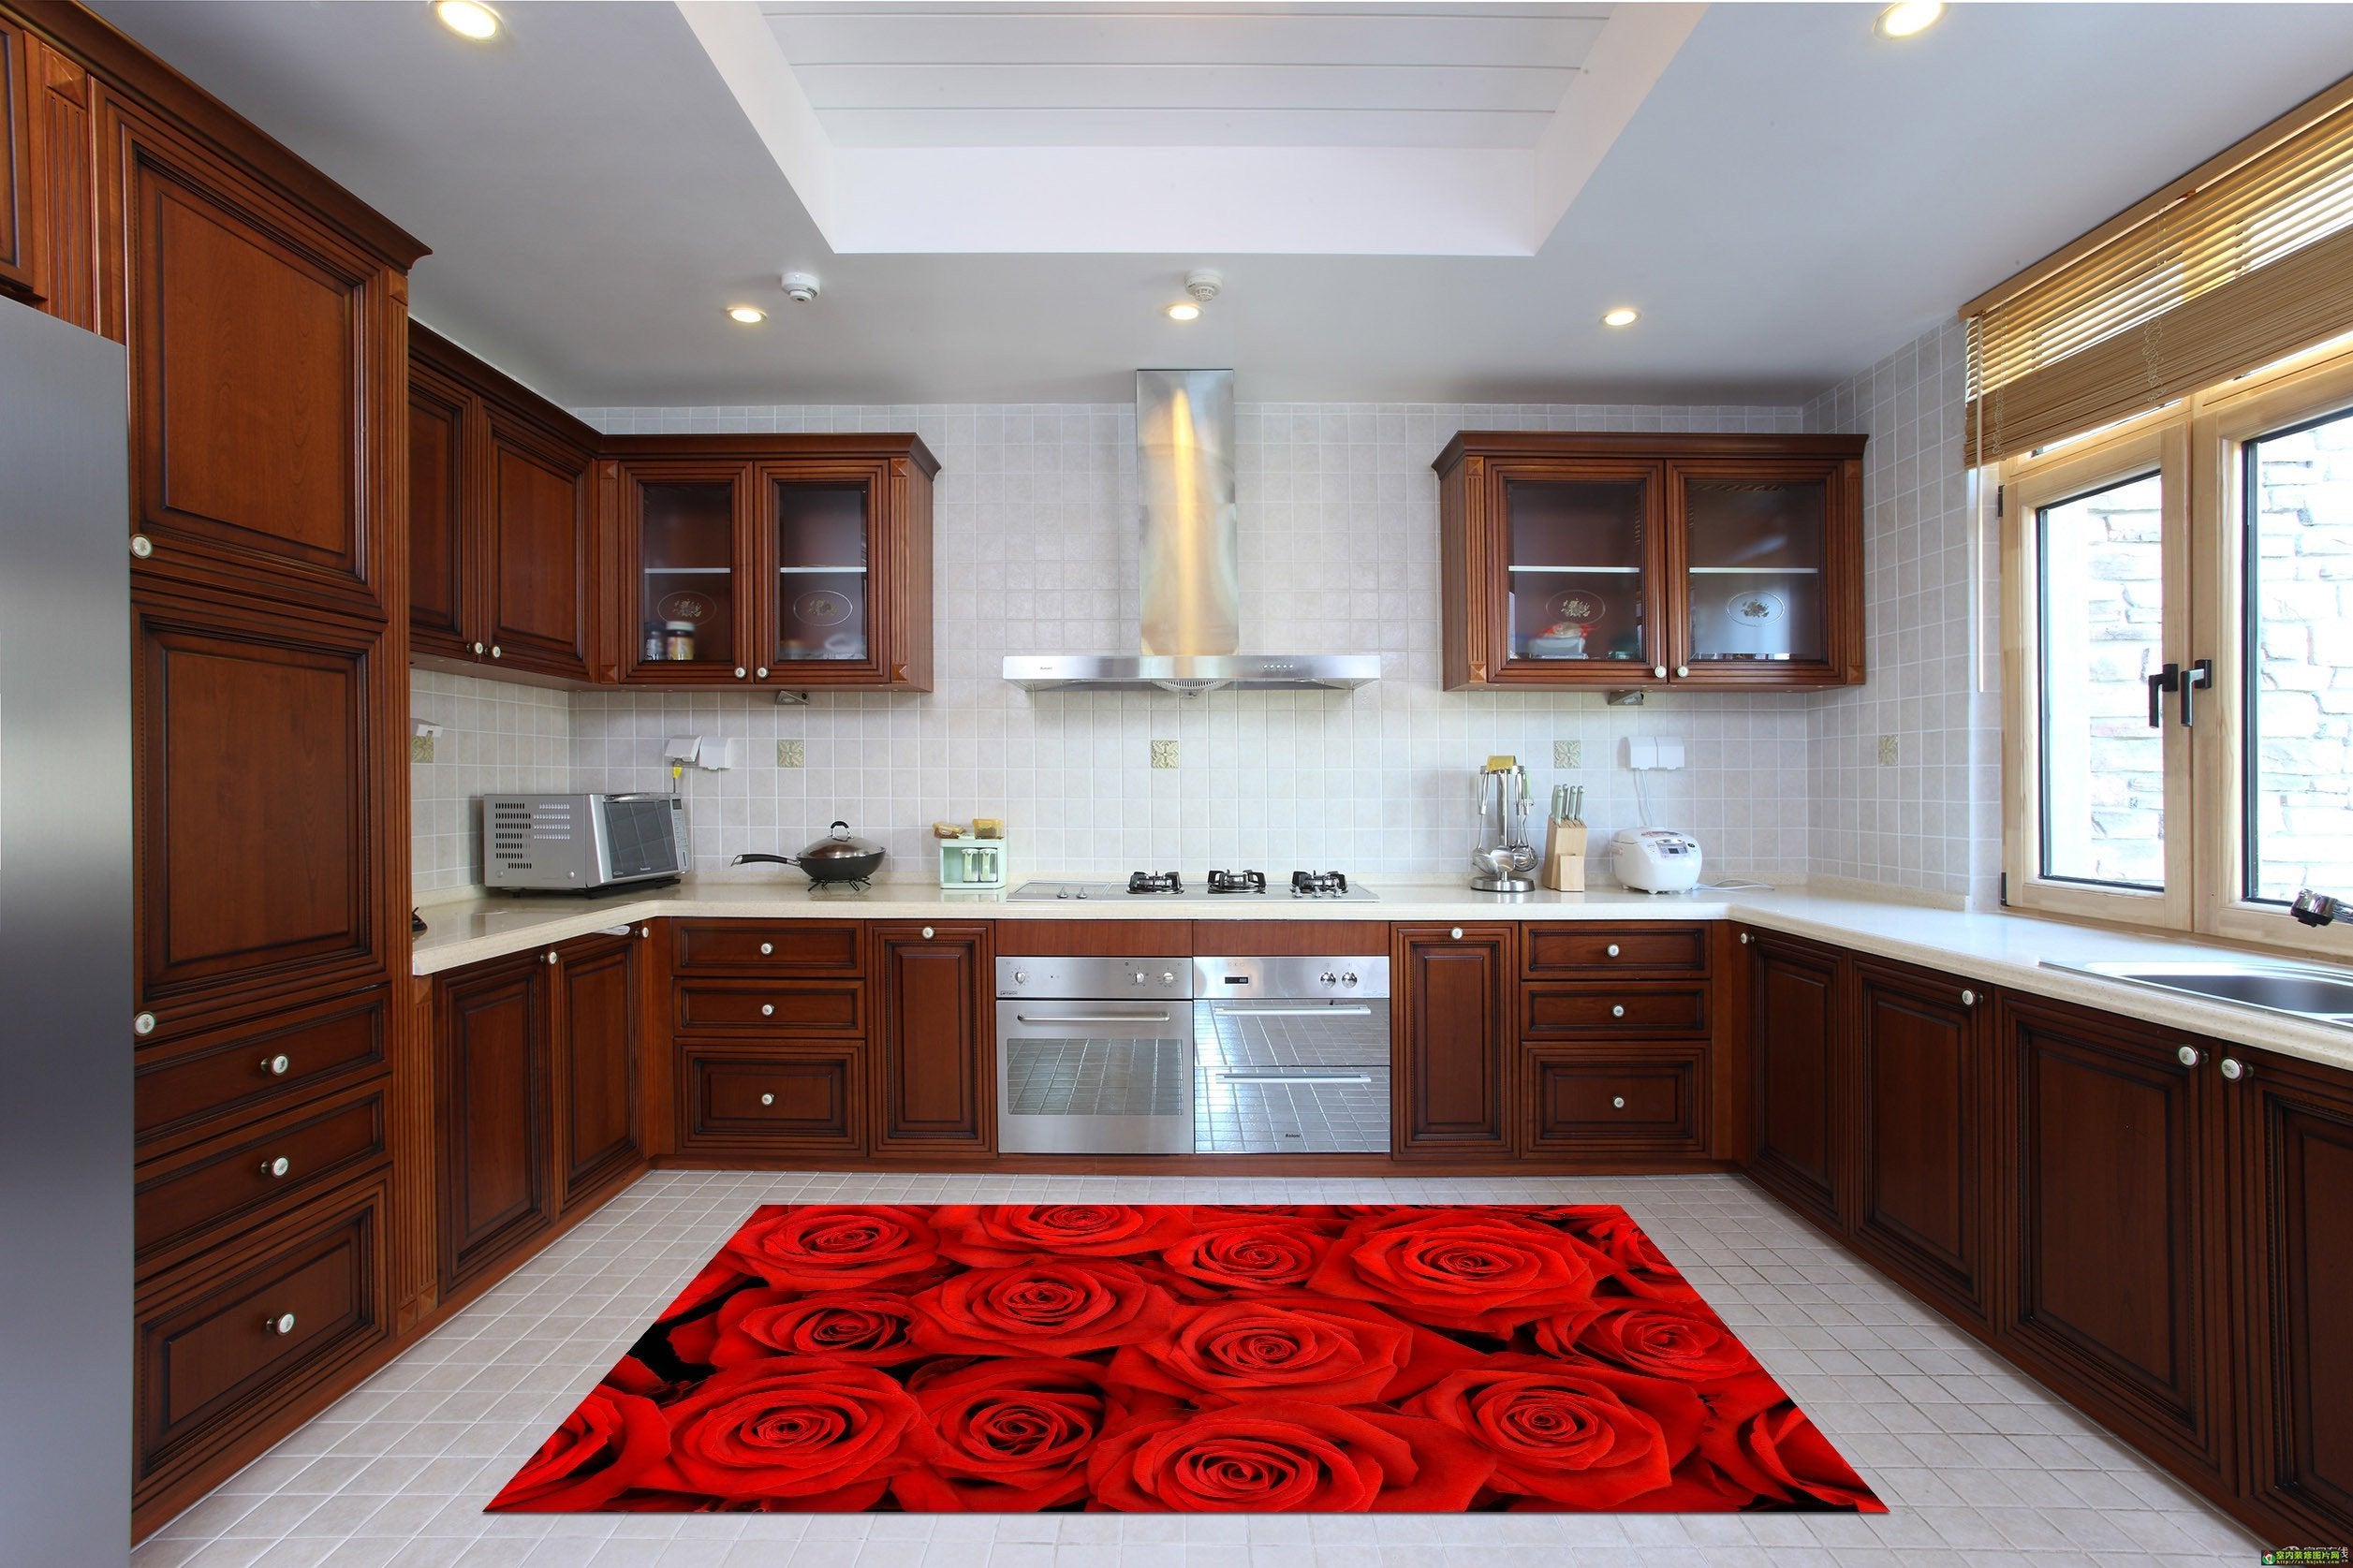 3D Red Roses Kitchen Mat Floor Mural Wallpaper AJ Wallpaper 